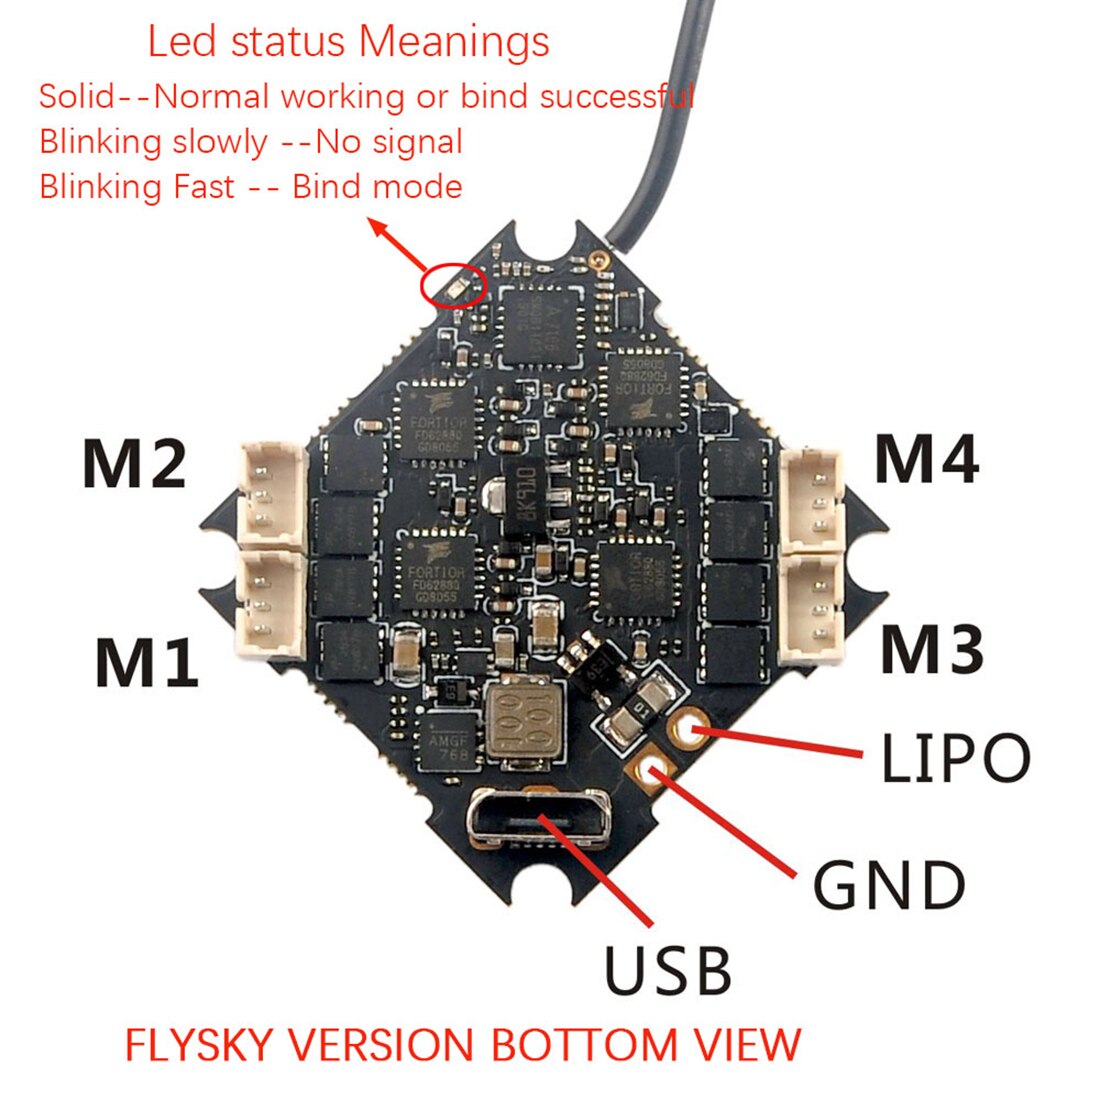 MGf 08 LIPO GND USB FLYSKY VERSION BOTTOM